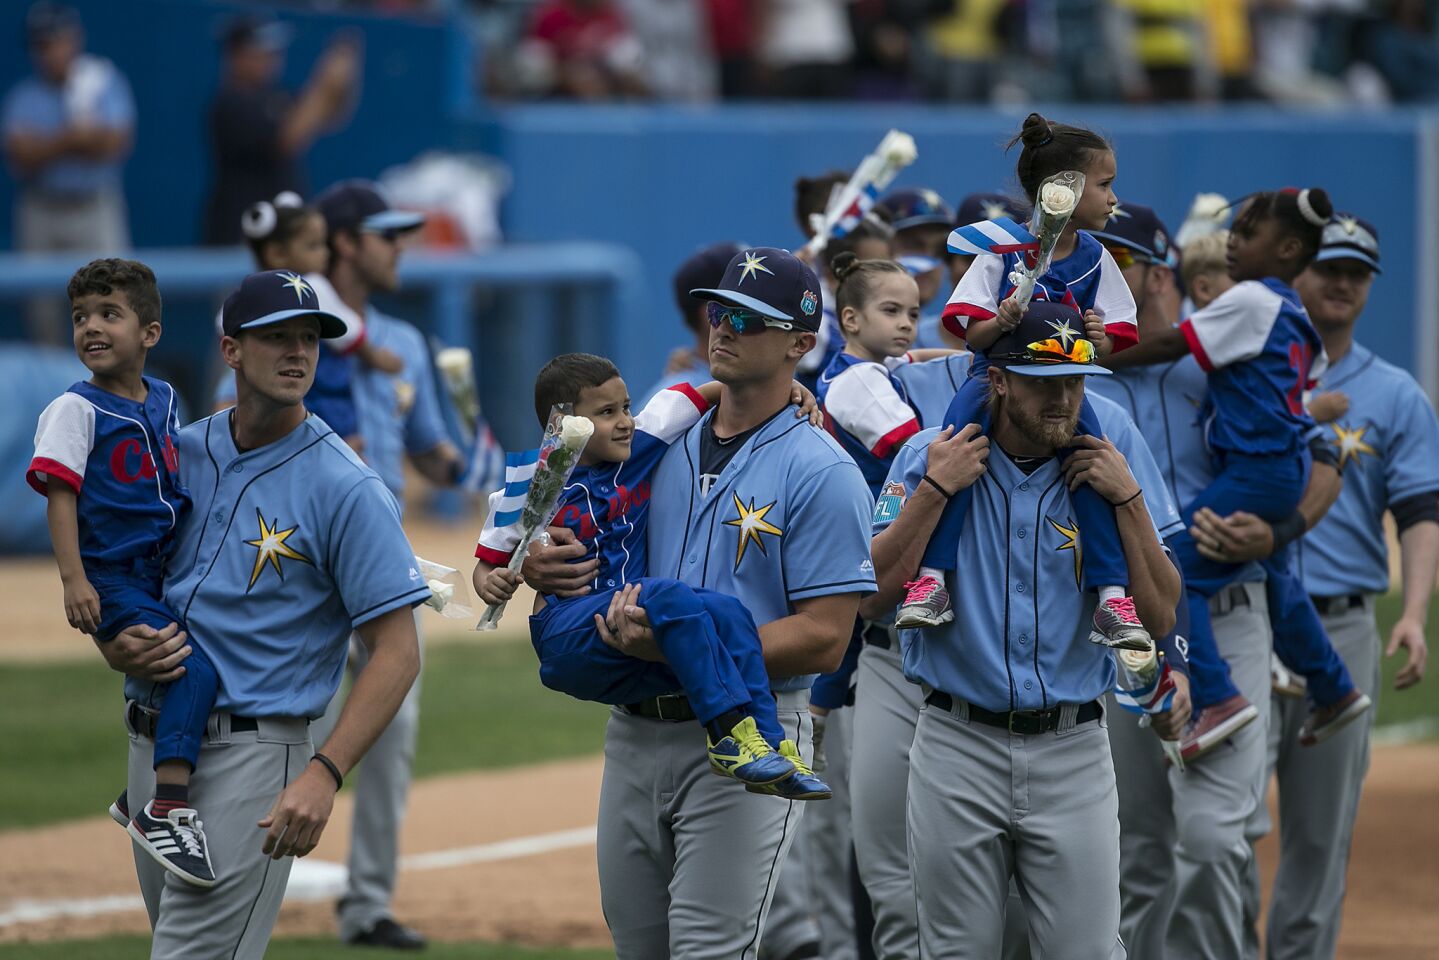 Baseball game in Havana